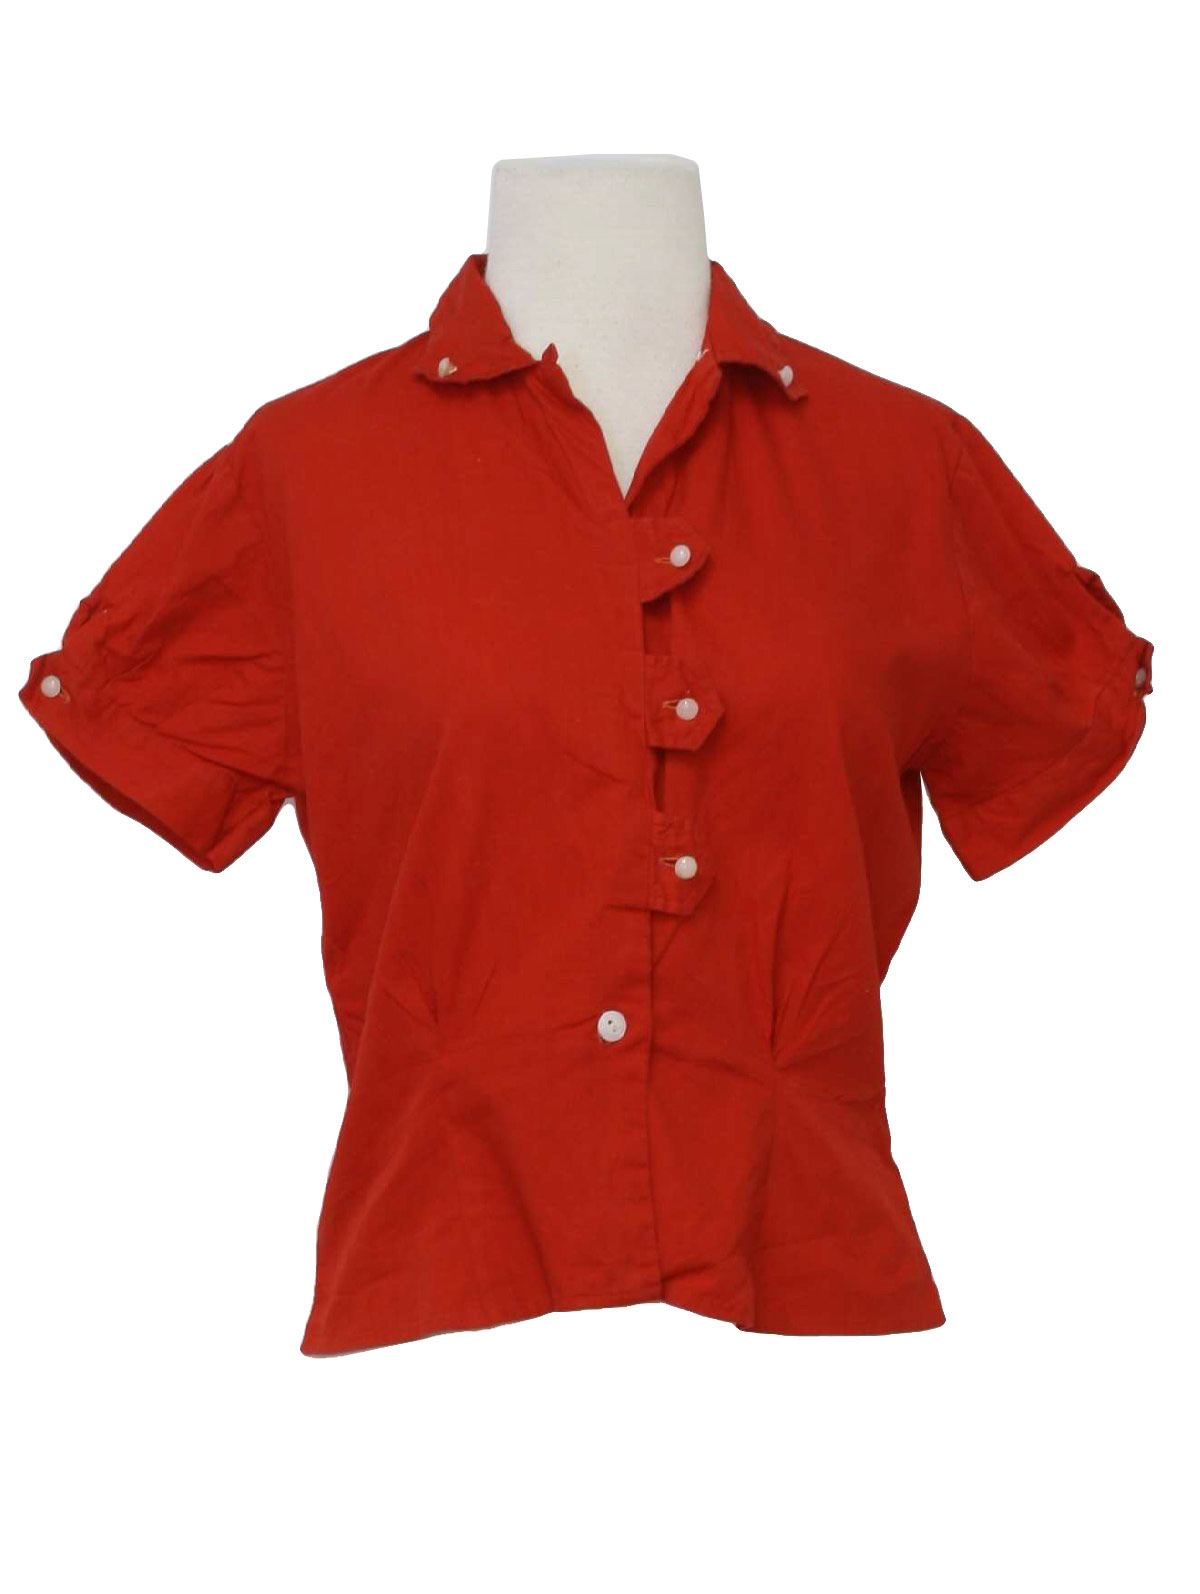 Miss Pat Fashions Sixties Vintage Shirt: Early 60s -Miss Pat Fashions ...